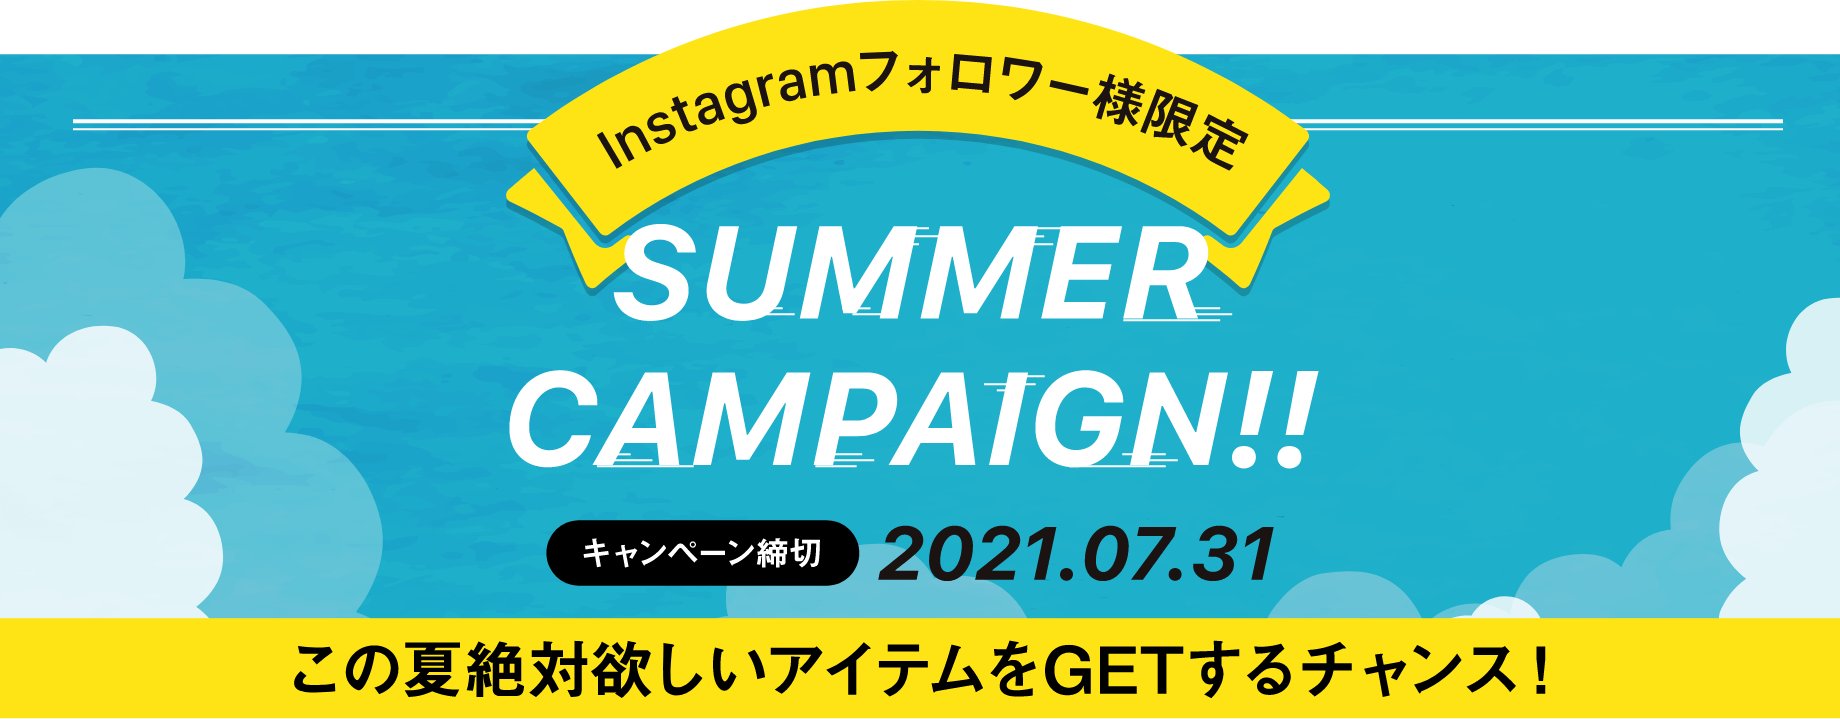 Instagramフォロワー様限定 SUMMER CAMPAIGN キャンペーン締切：2021.07.31